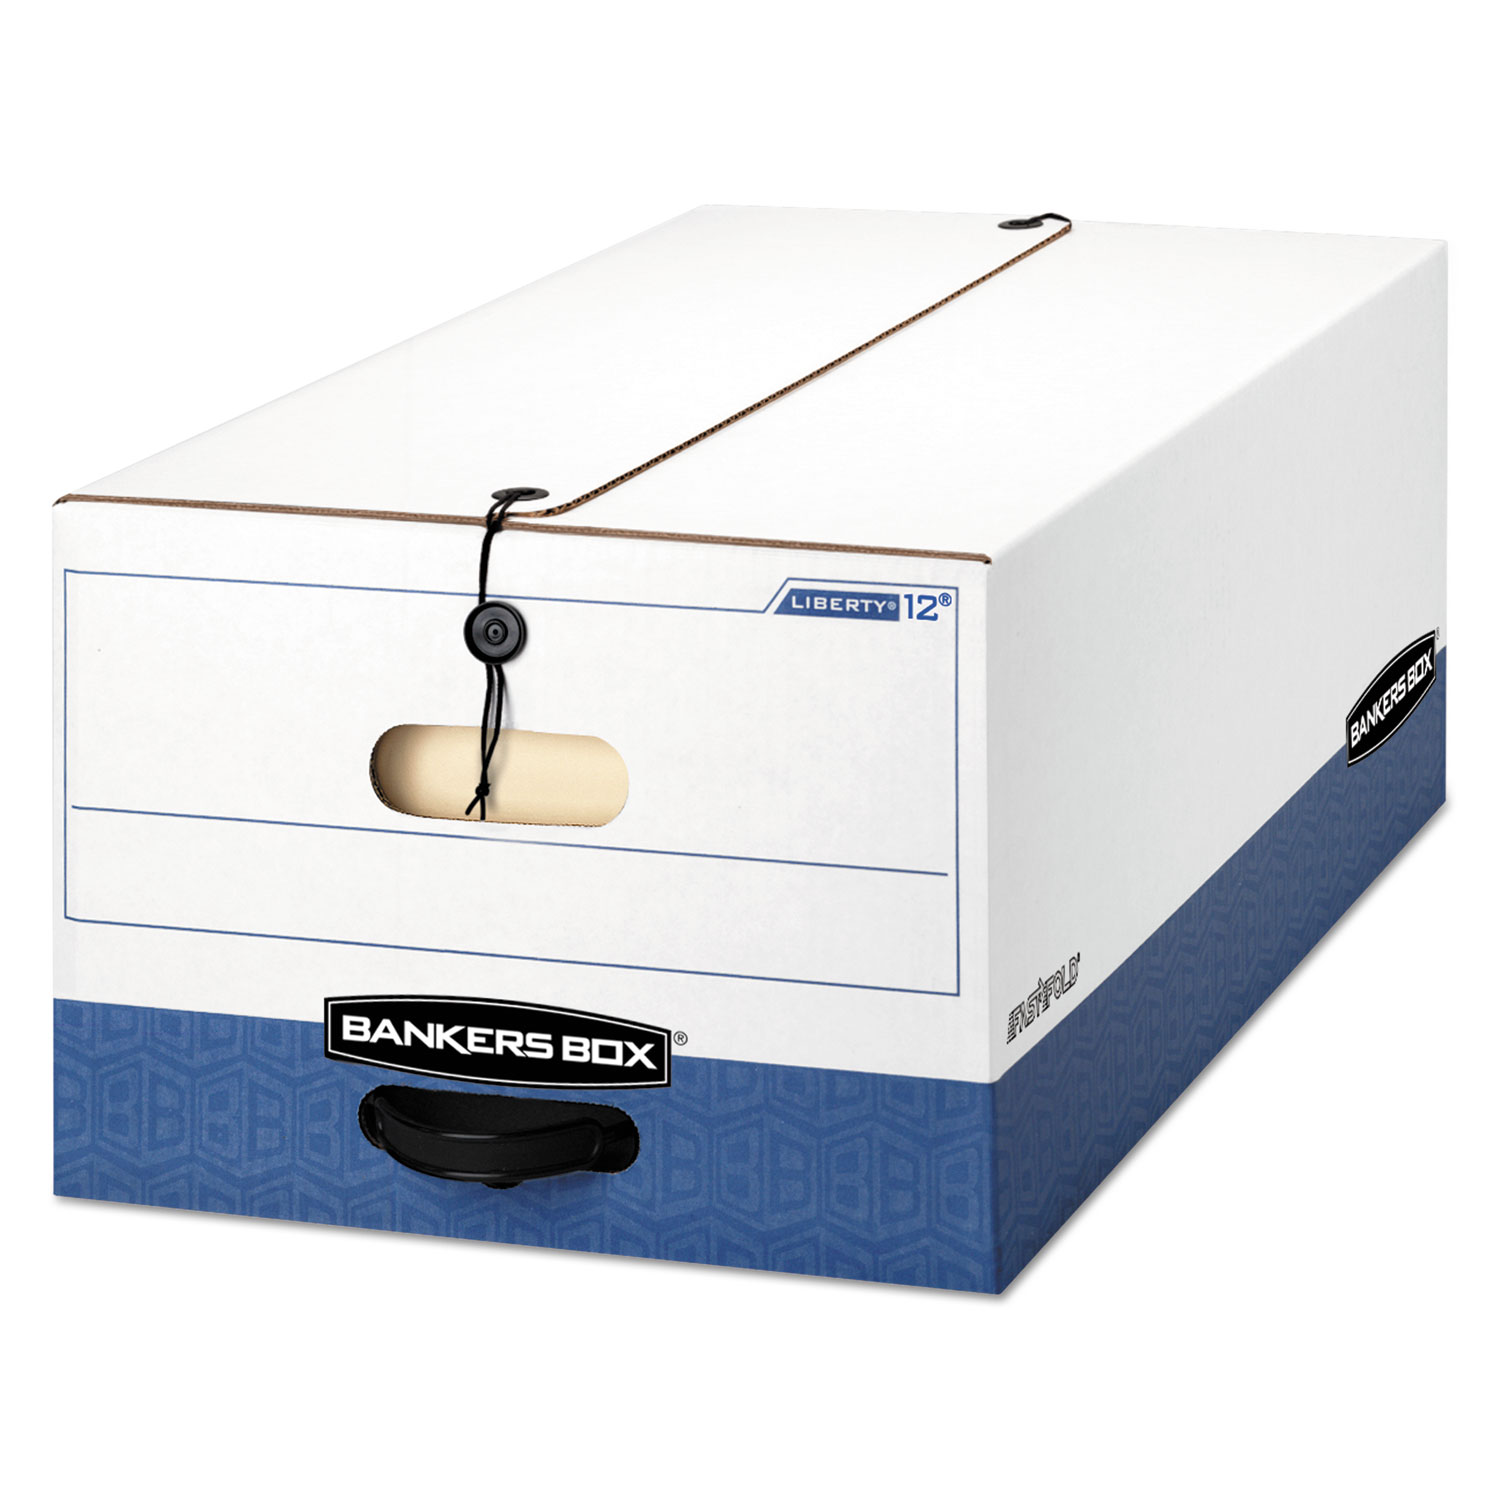  Bankers Box 0001203 LIBERTY Heavy-Duty Strength Storage Boxes, Legal Files, 15.25 x 24.13 x 10.75, White/Blue, 4/Carton (FEL0001203) 